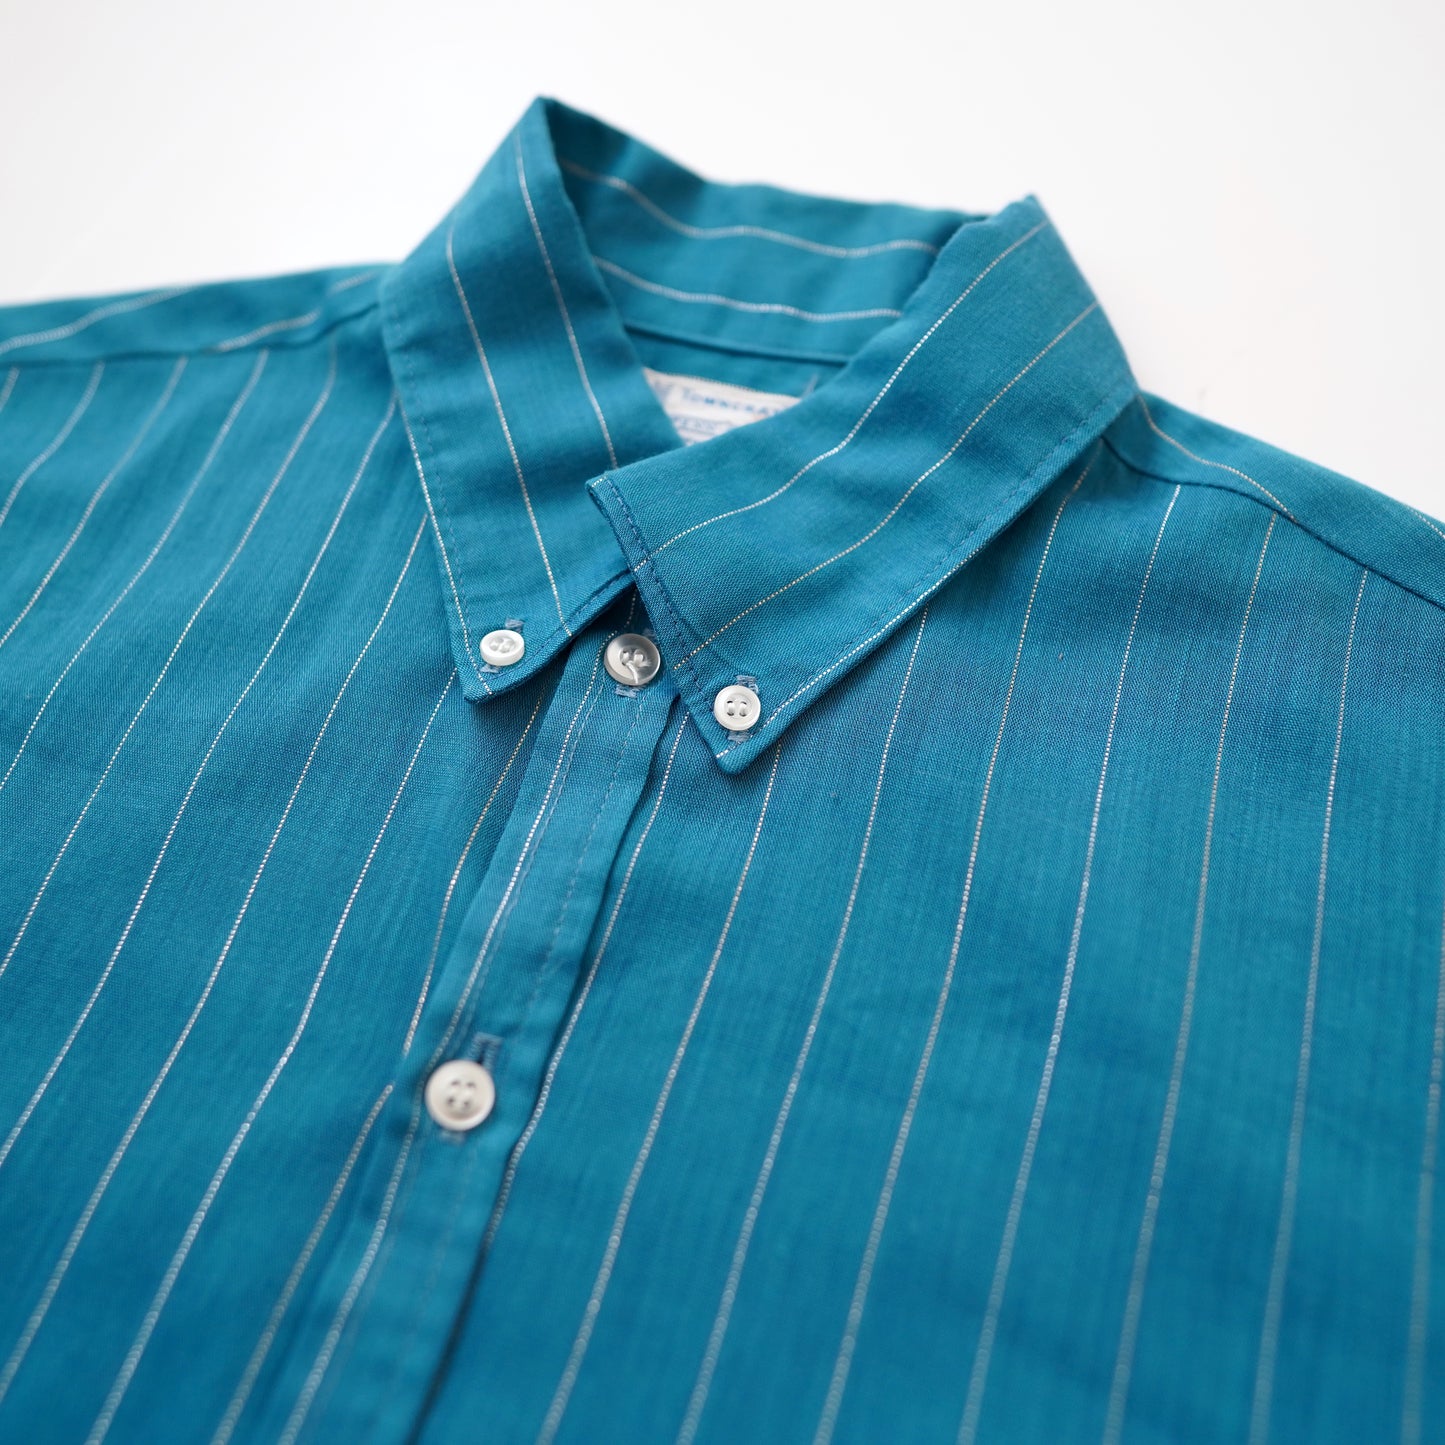 70s stripe button down collar shirt